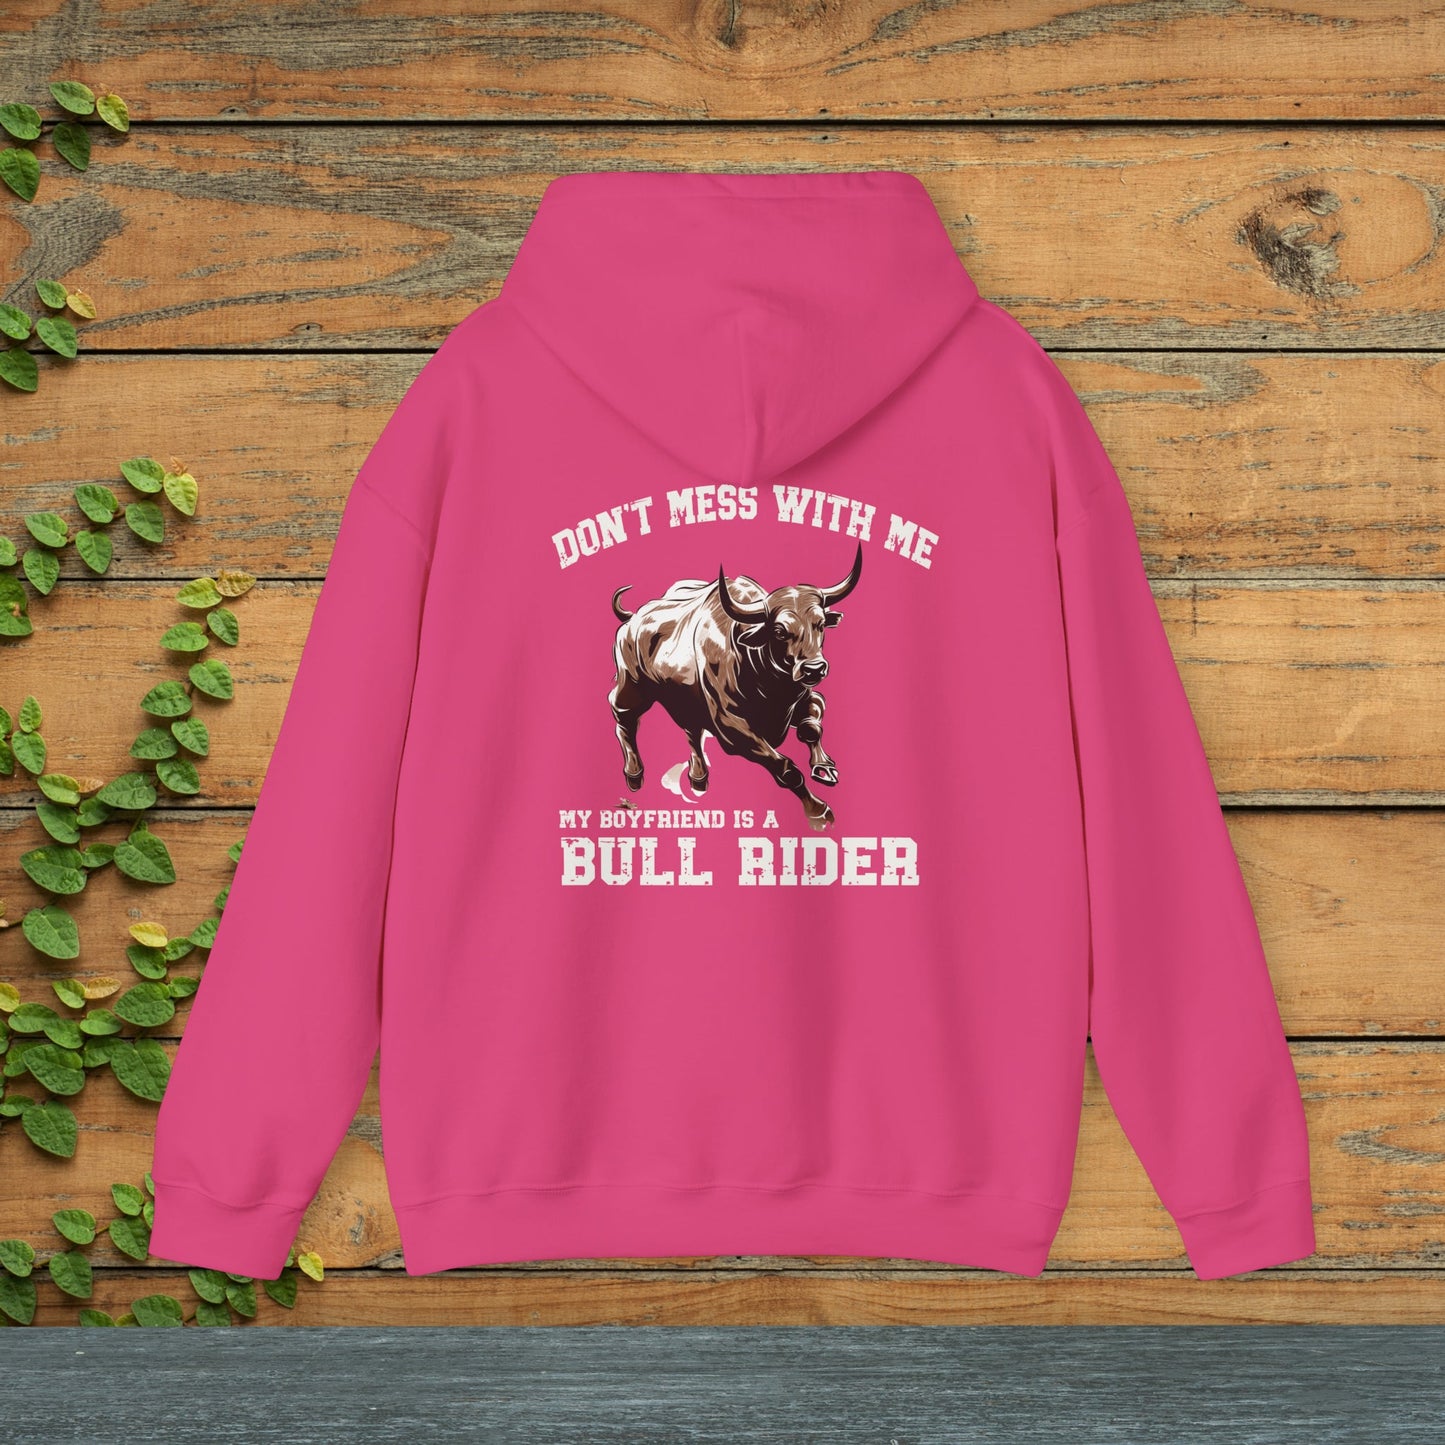 Rodeo Girlfriend Sweatshirt Hoodie, Girlfriend of a Cowboy Bull Rider, Don't Mess Me Sweatshirt Hoodie, Tough Chic Western Rodeo Shirt - FlooredByArt